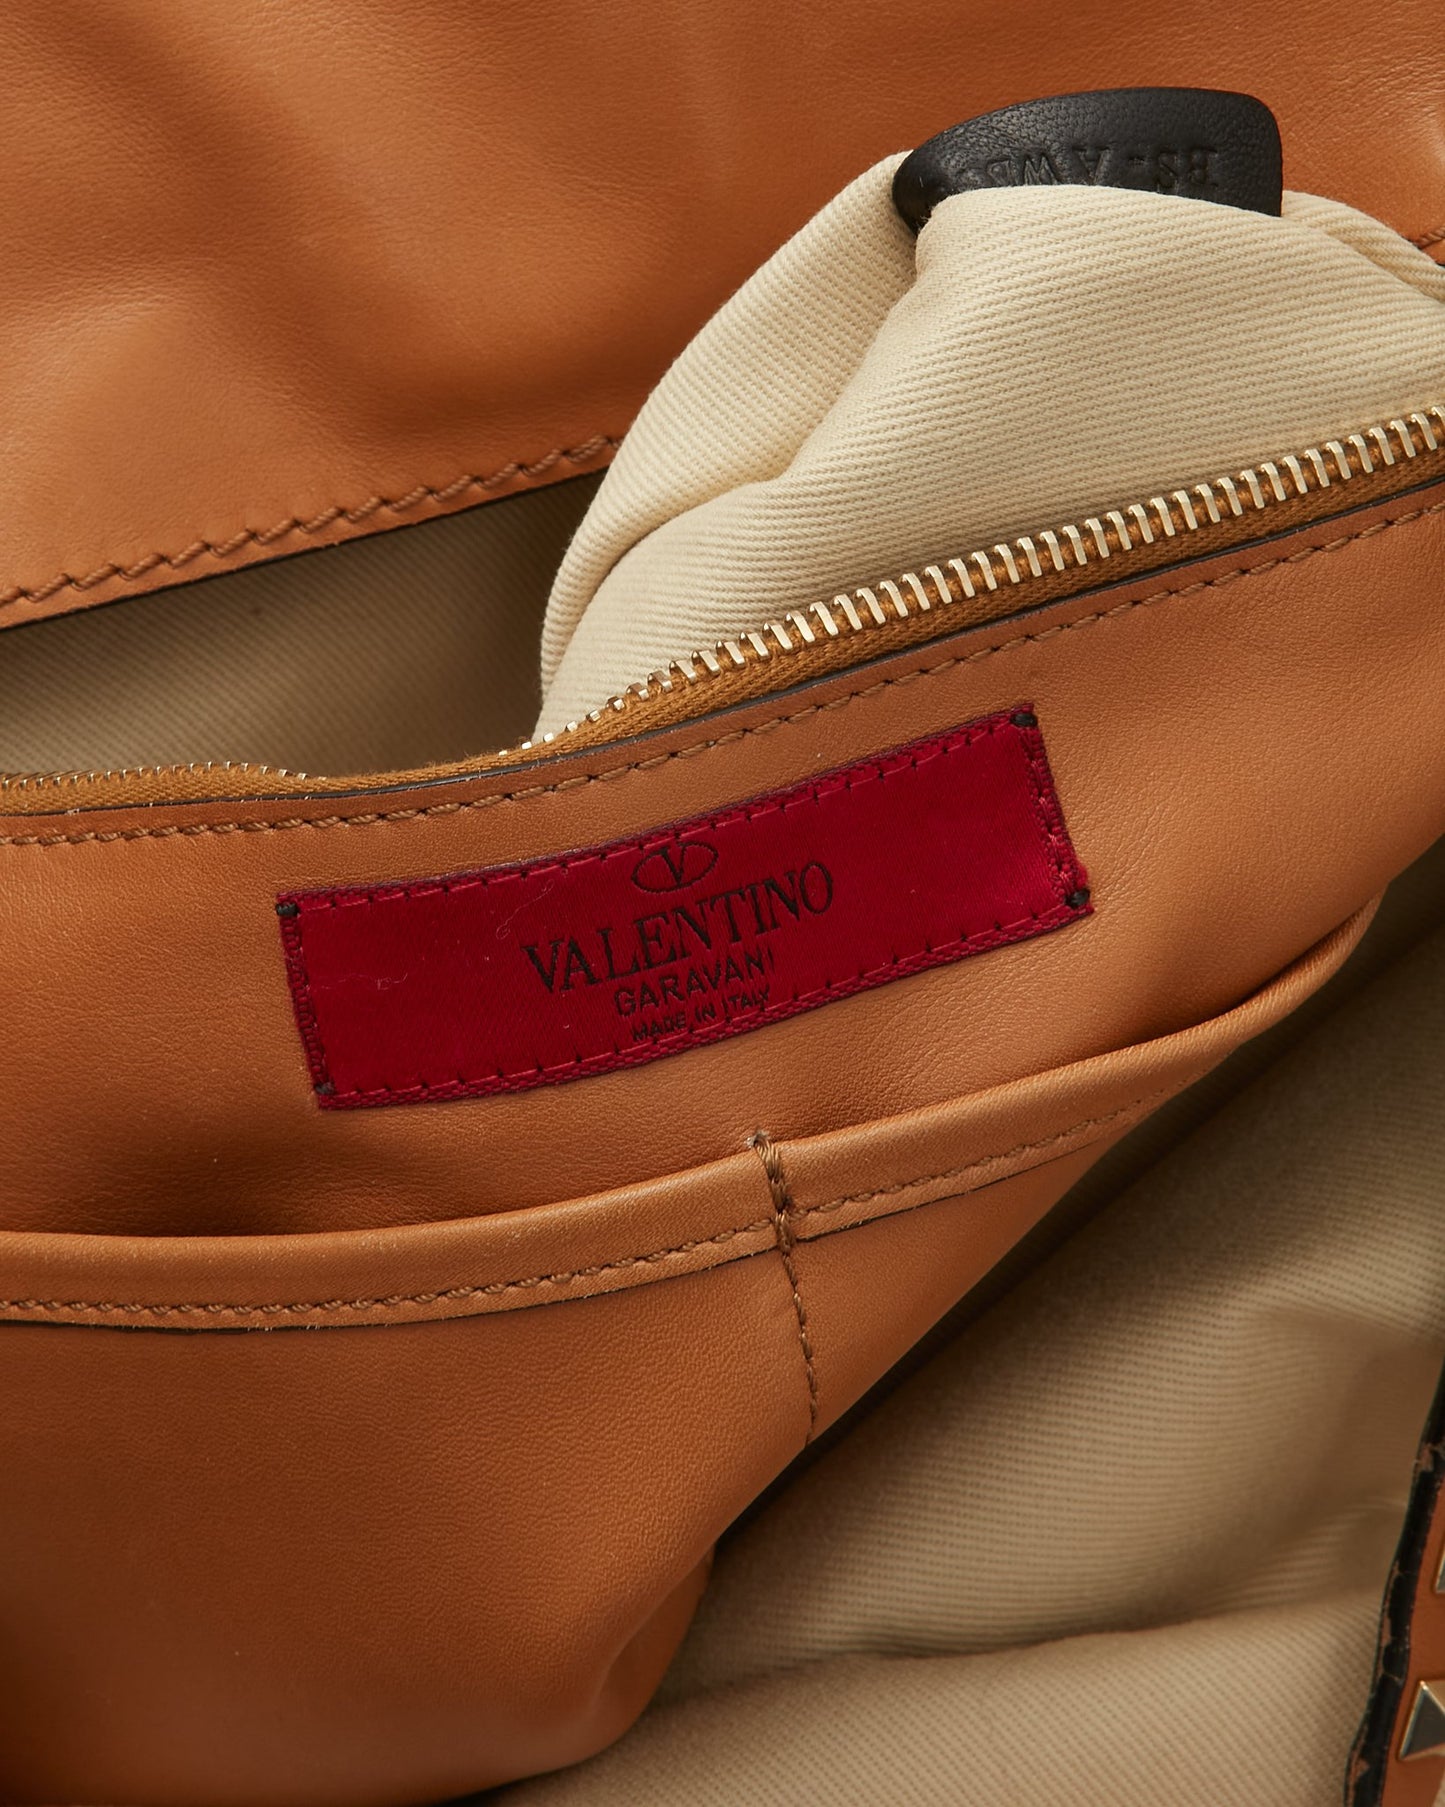 Valentino Tan Smooth Leather Rockstud Tote Bag